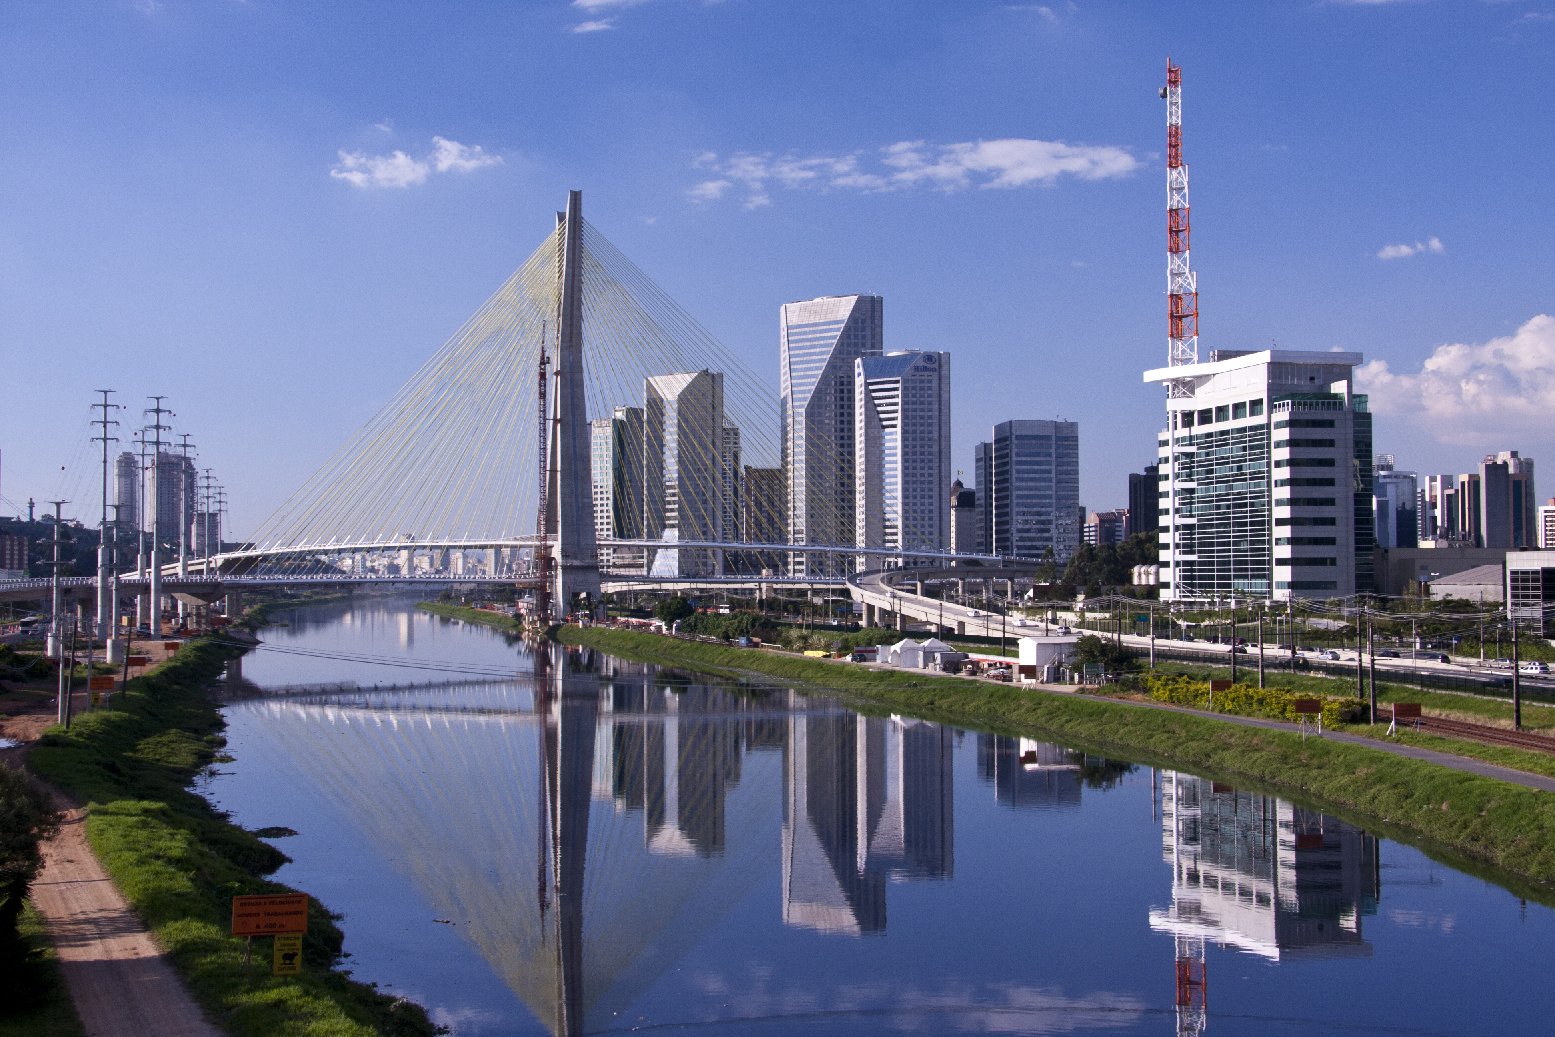 Brazil - Sao Paulo city - Marginal Pinheiros